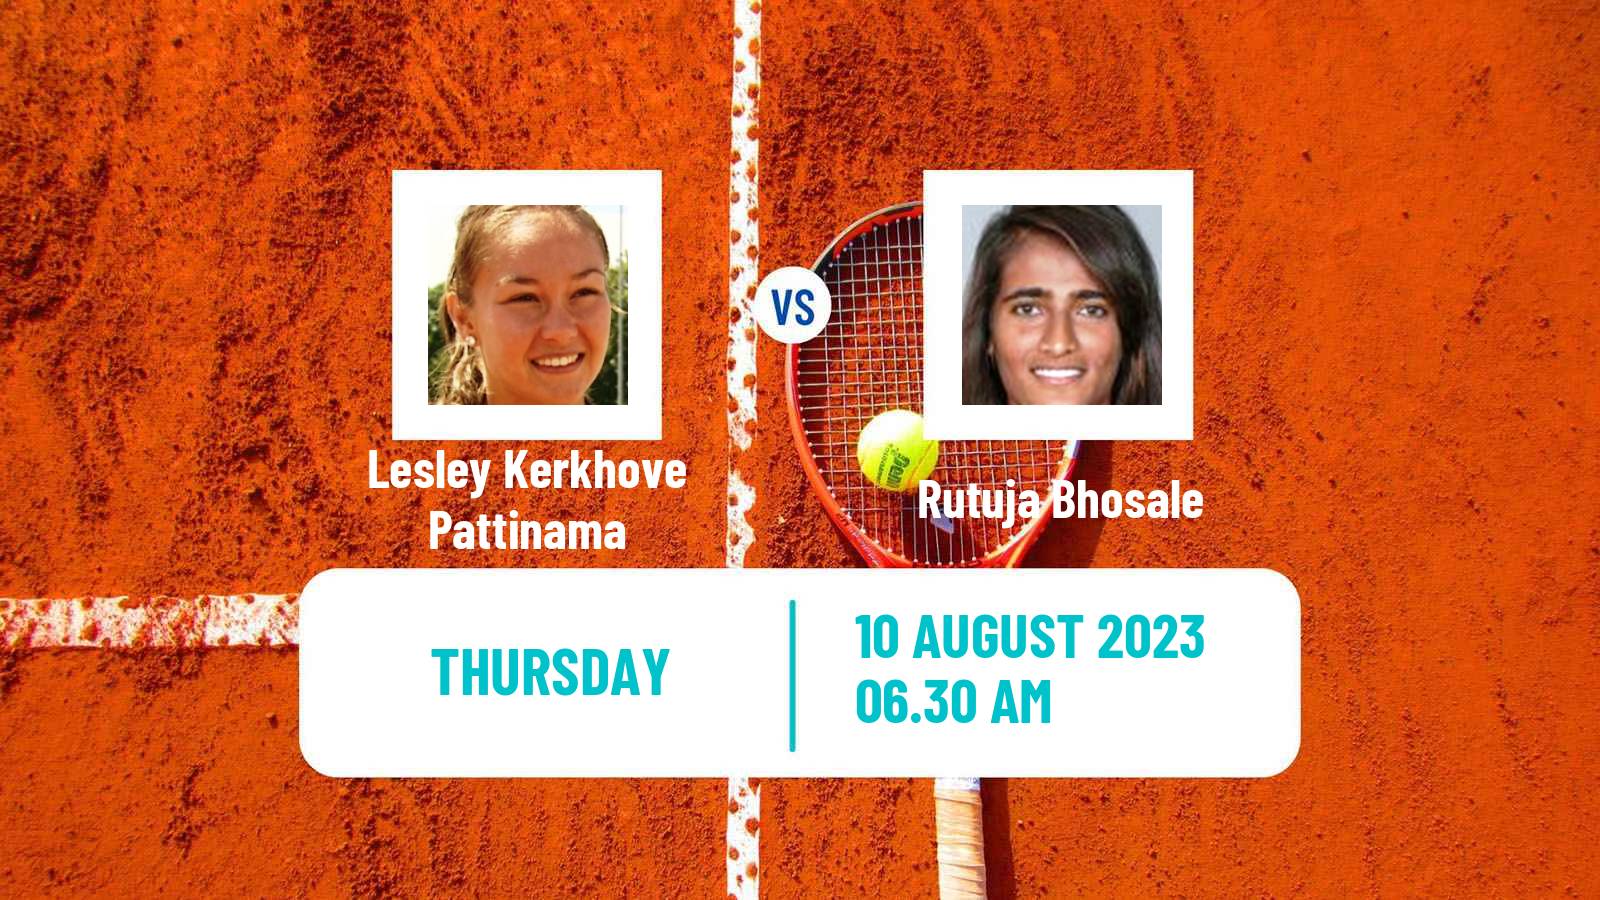 Tennis ITF W25 Roehampton 3 Women Lesley Kerkhove Pattinama - Rutuja Bhosale